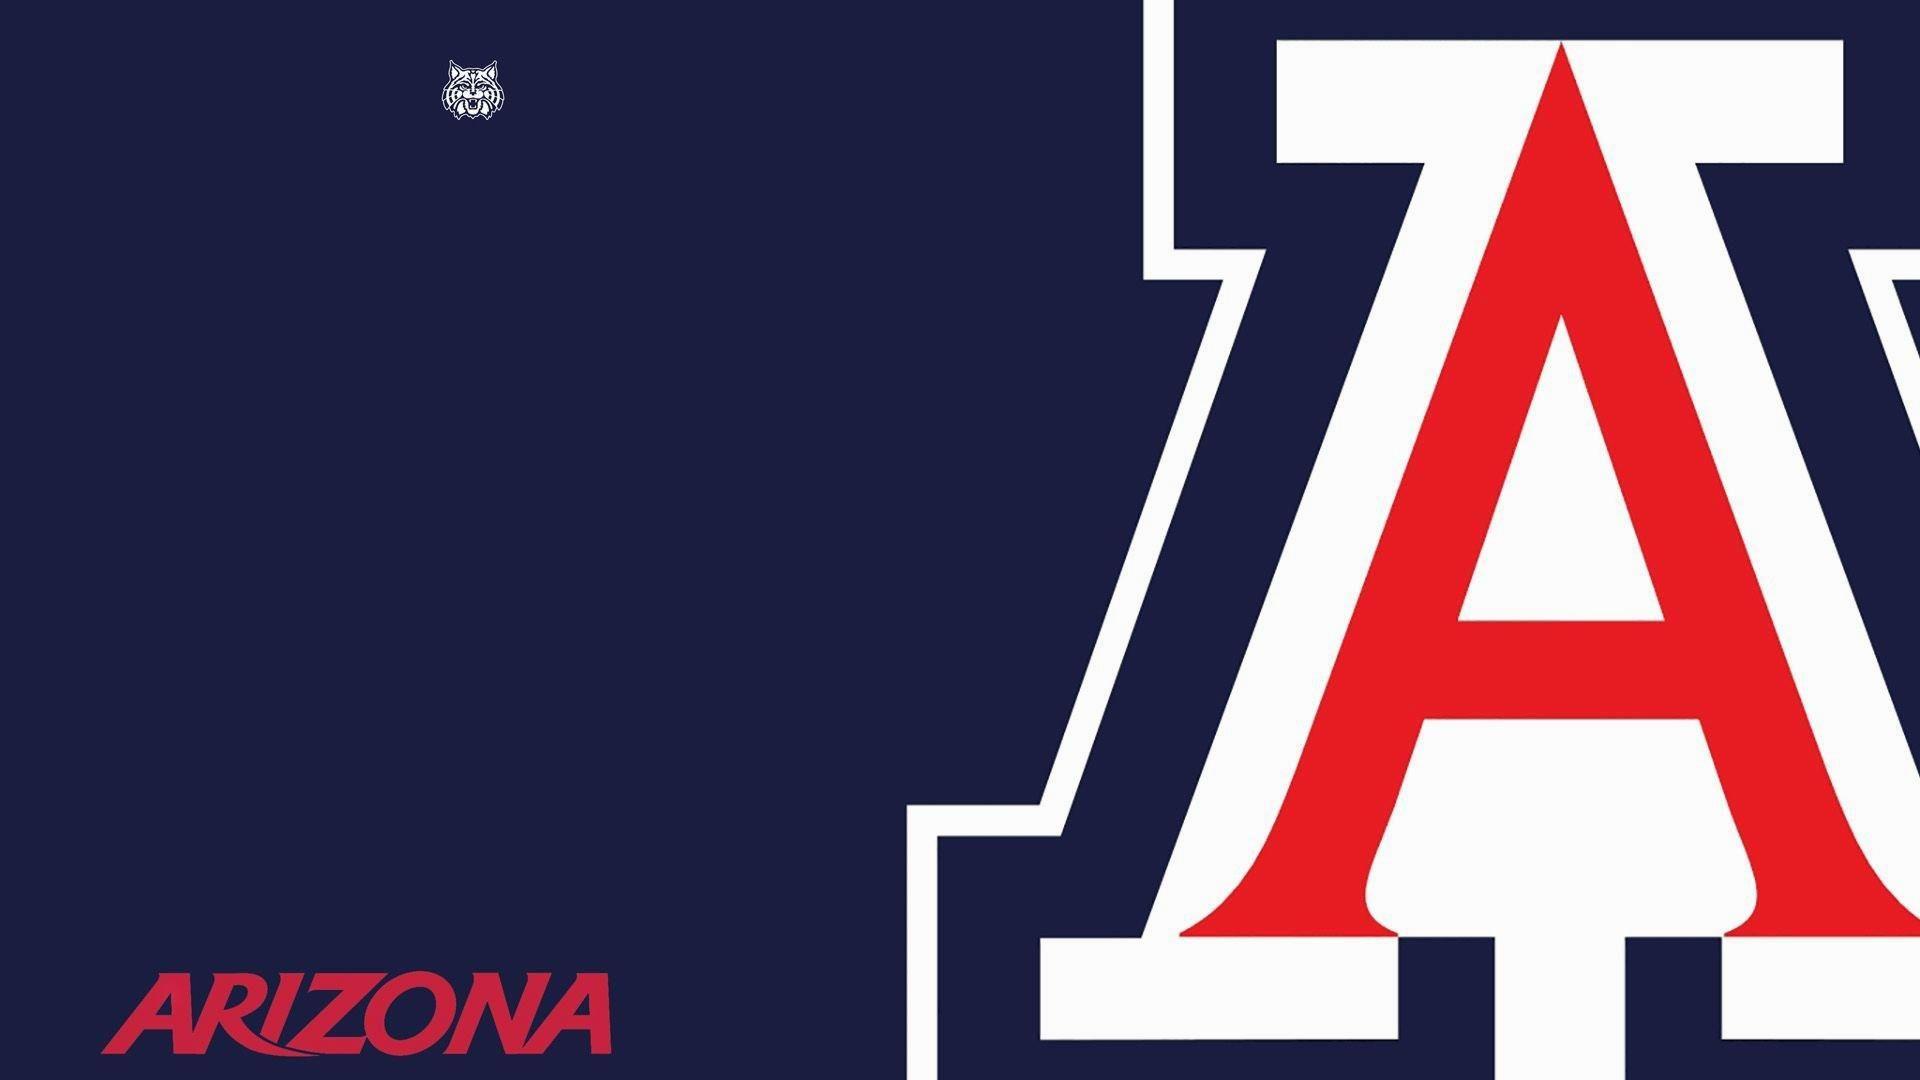 University of Arizona Logo - University of Arizona Logo Desktop Wallpaper 62473 1920x1080px